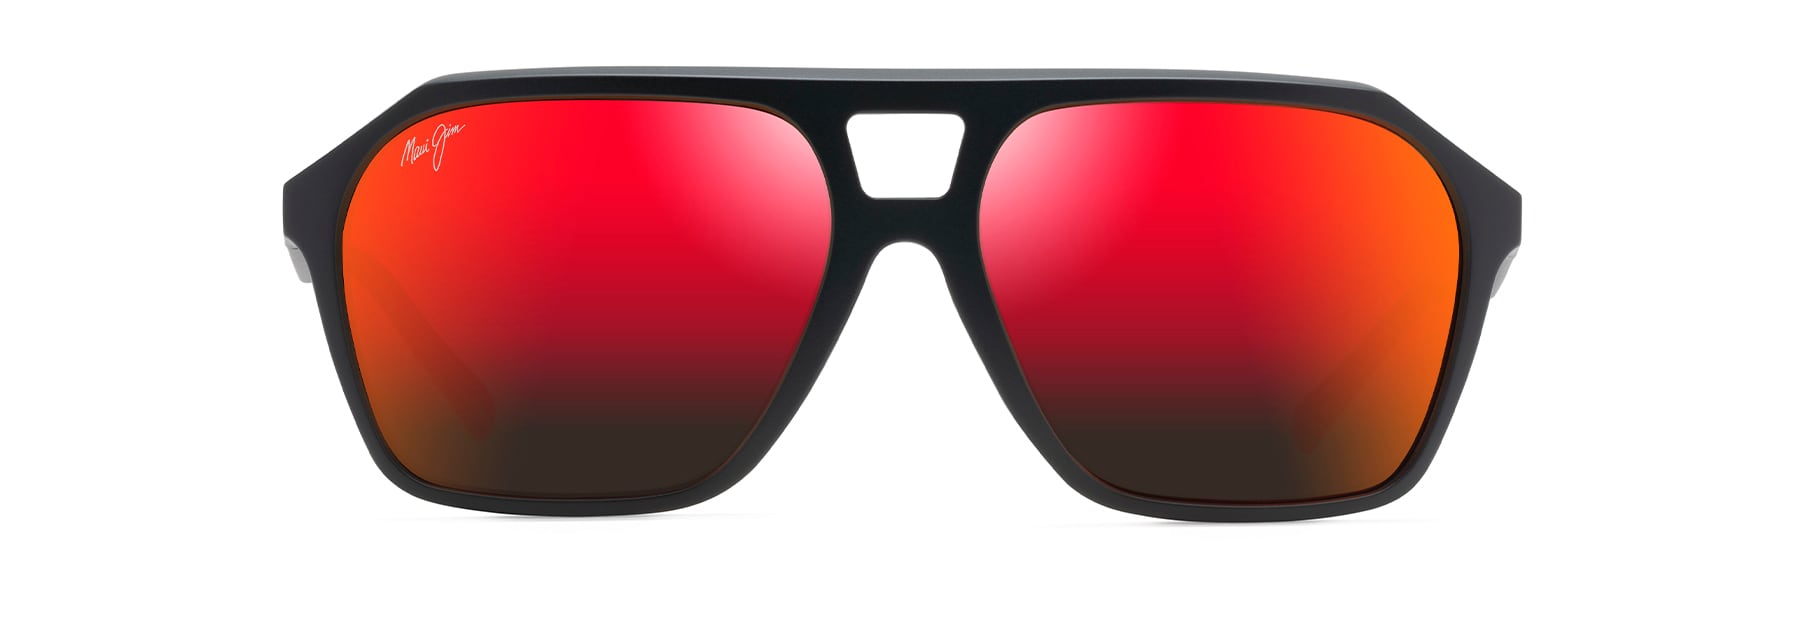 WEDGES Aviators Sunglasses